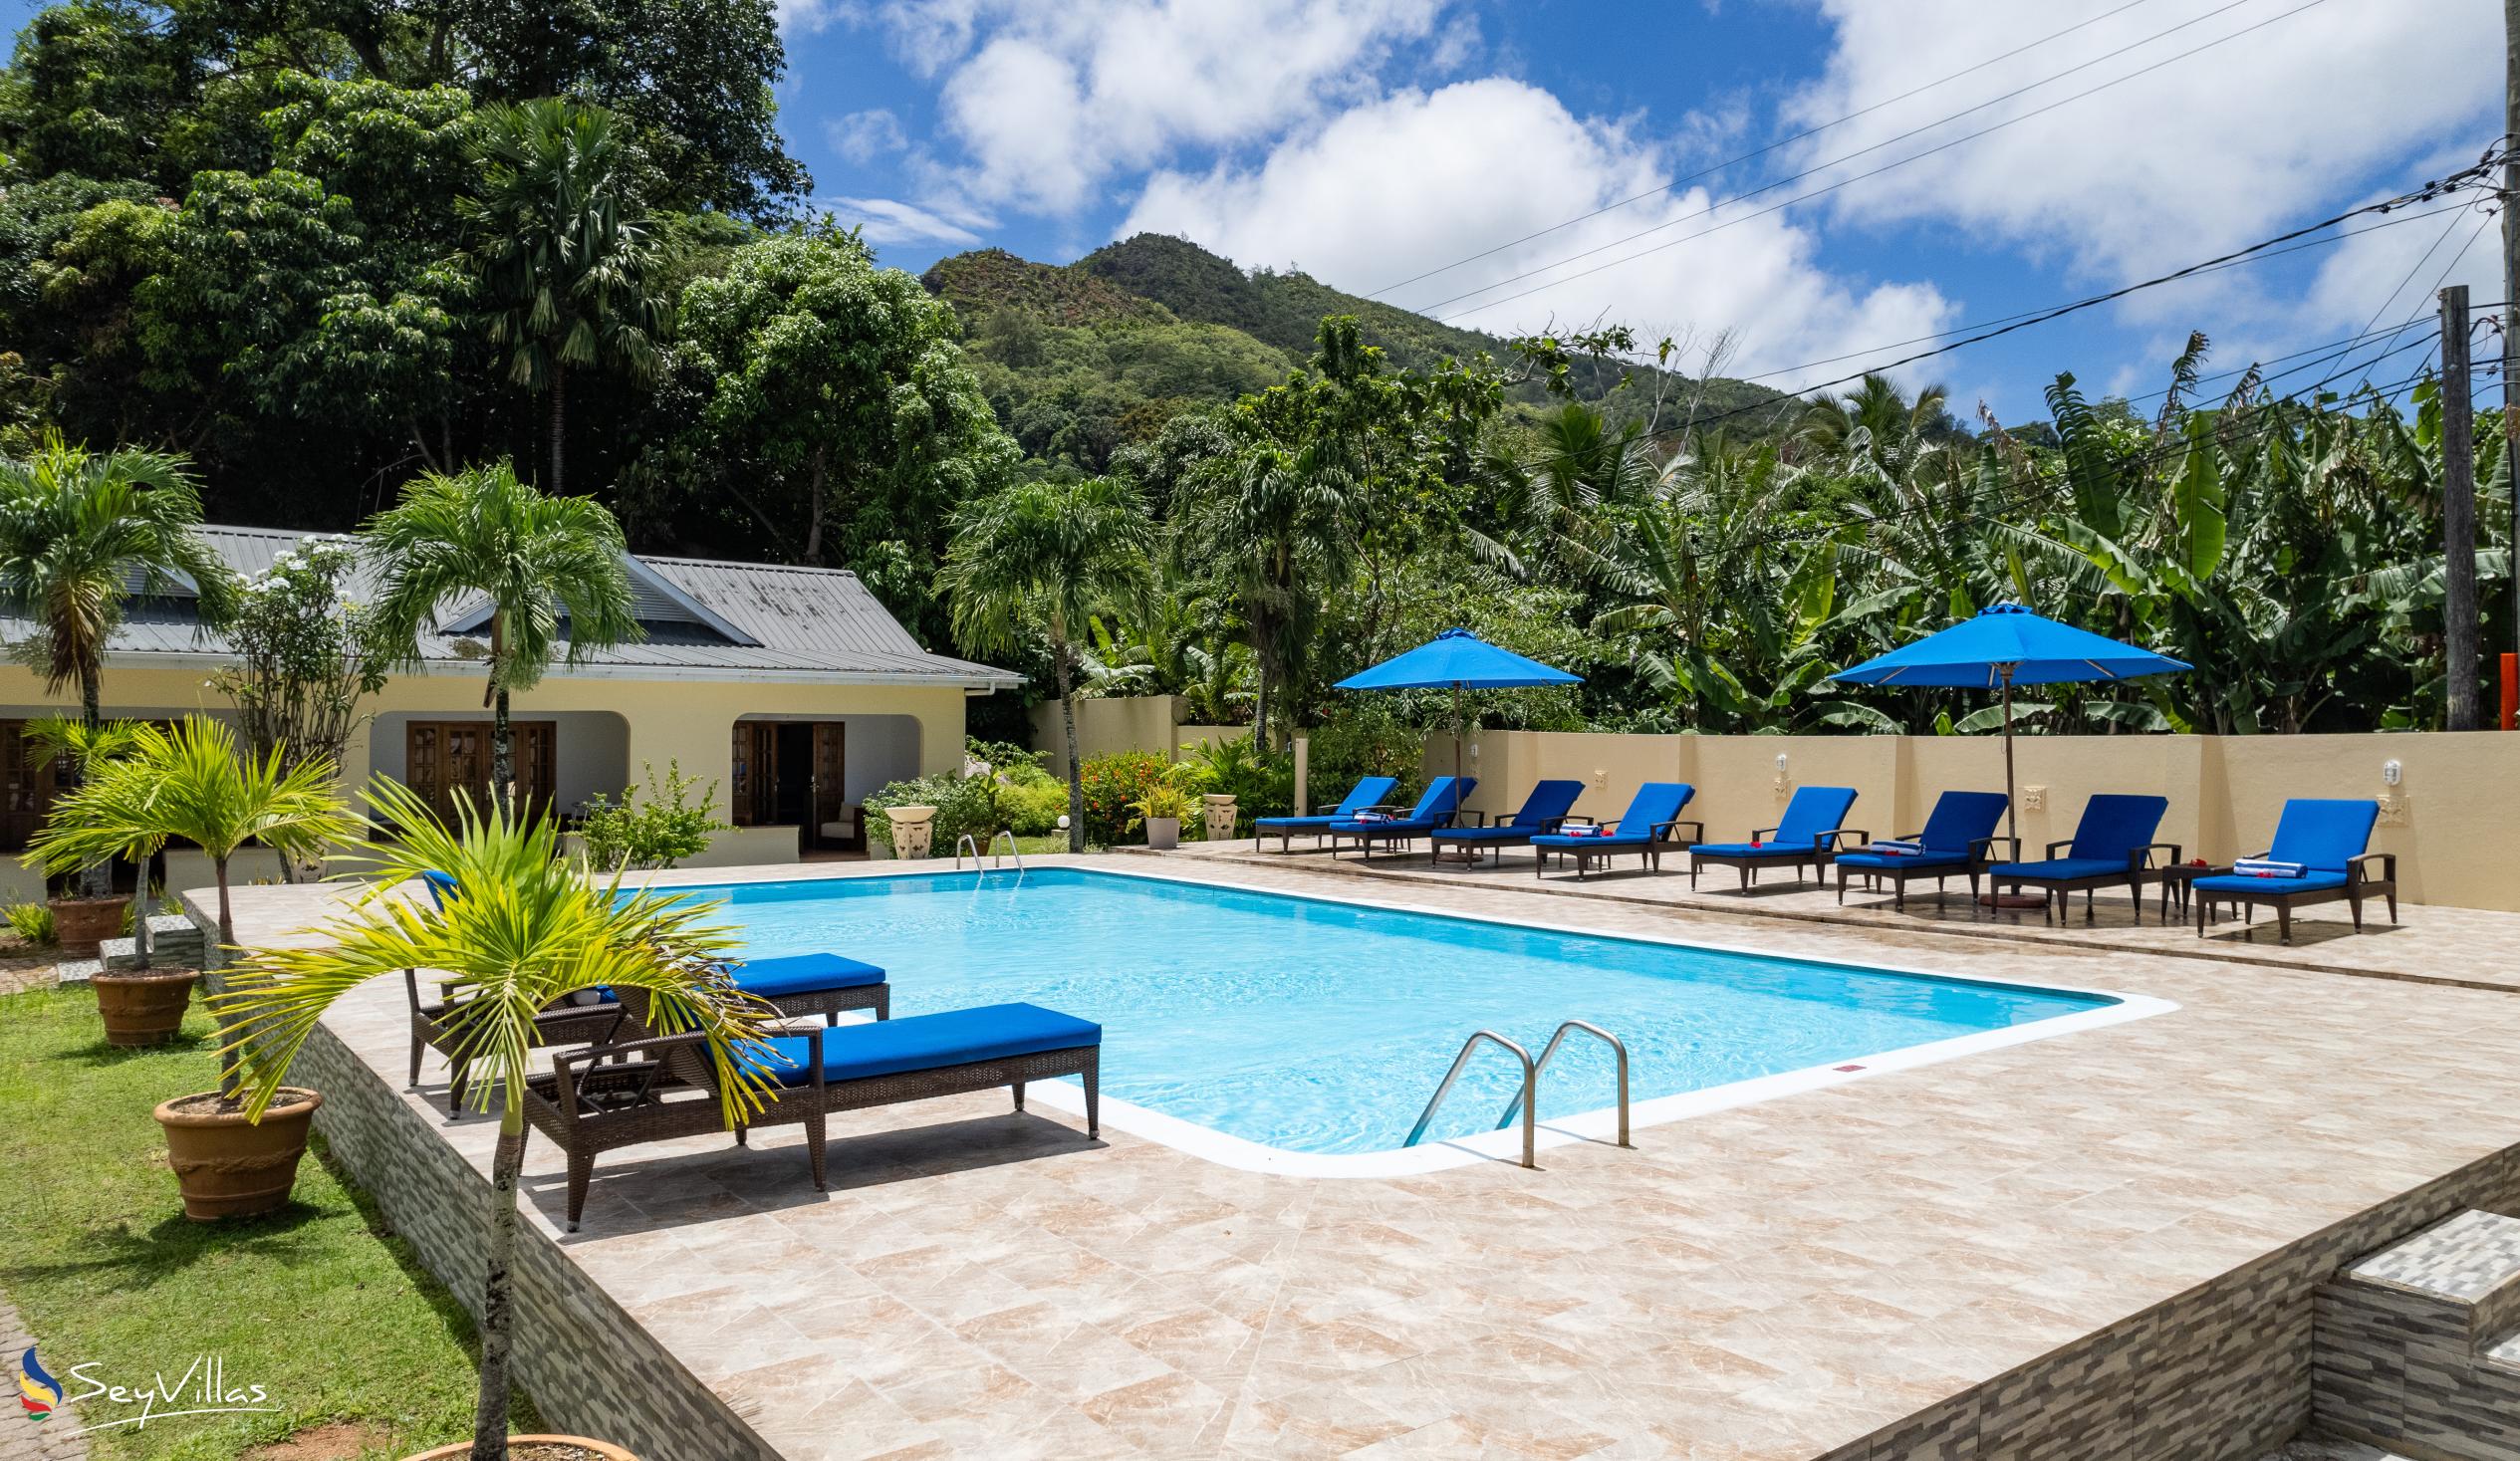 Photo 1: Britannia Hotel - Outdoor area - Praslin (Seychelles)